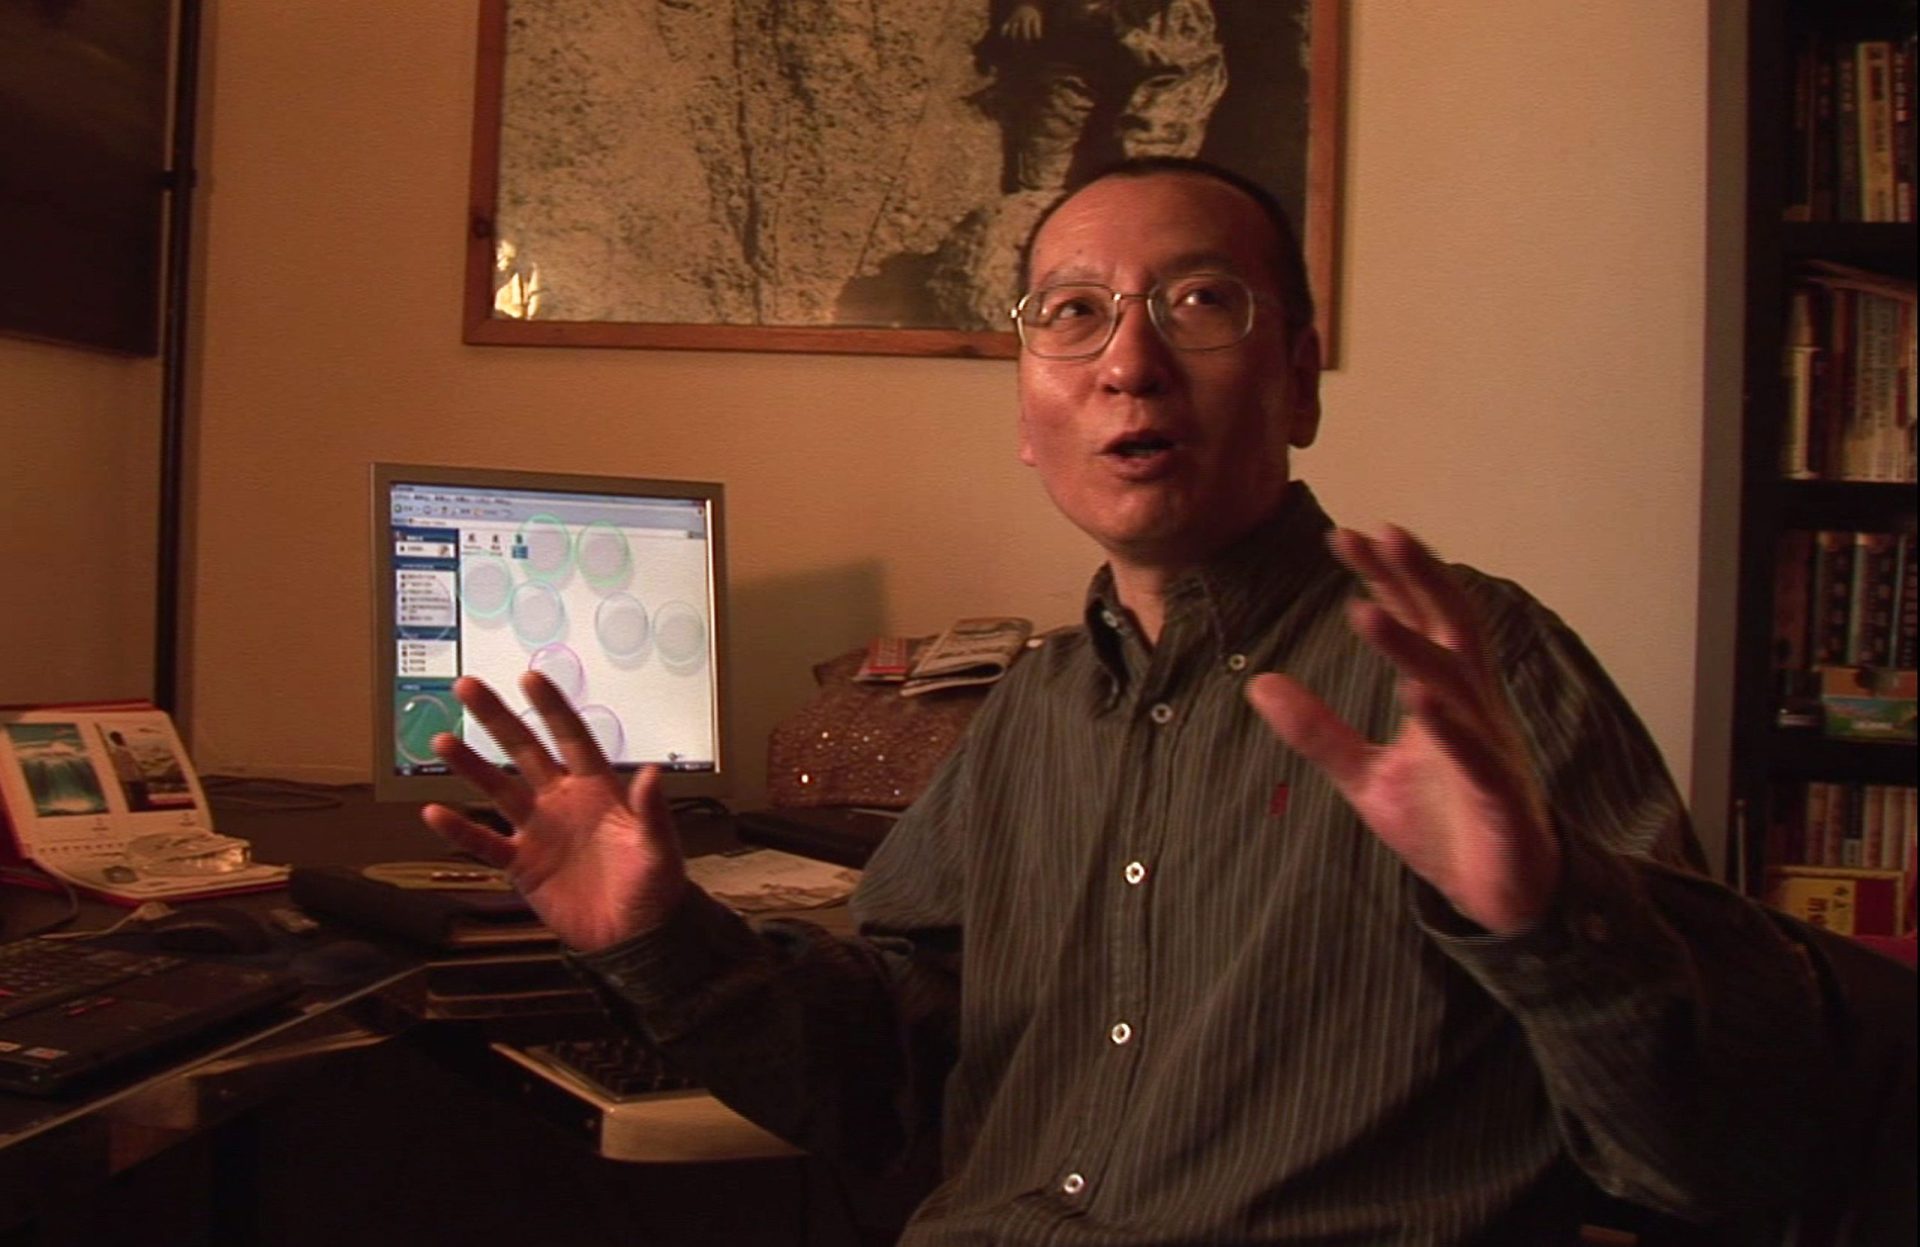 Morreu Liu Xiaobo, o Nobel da Paz